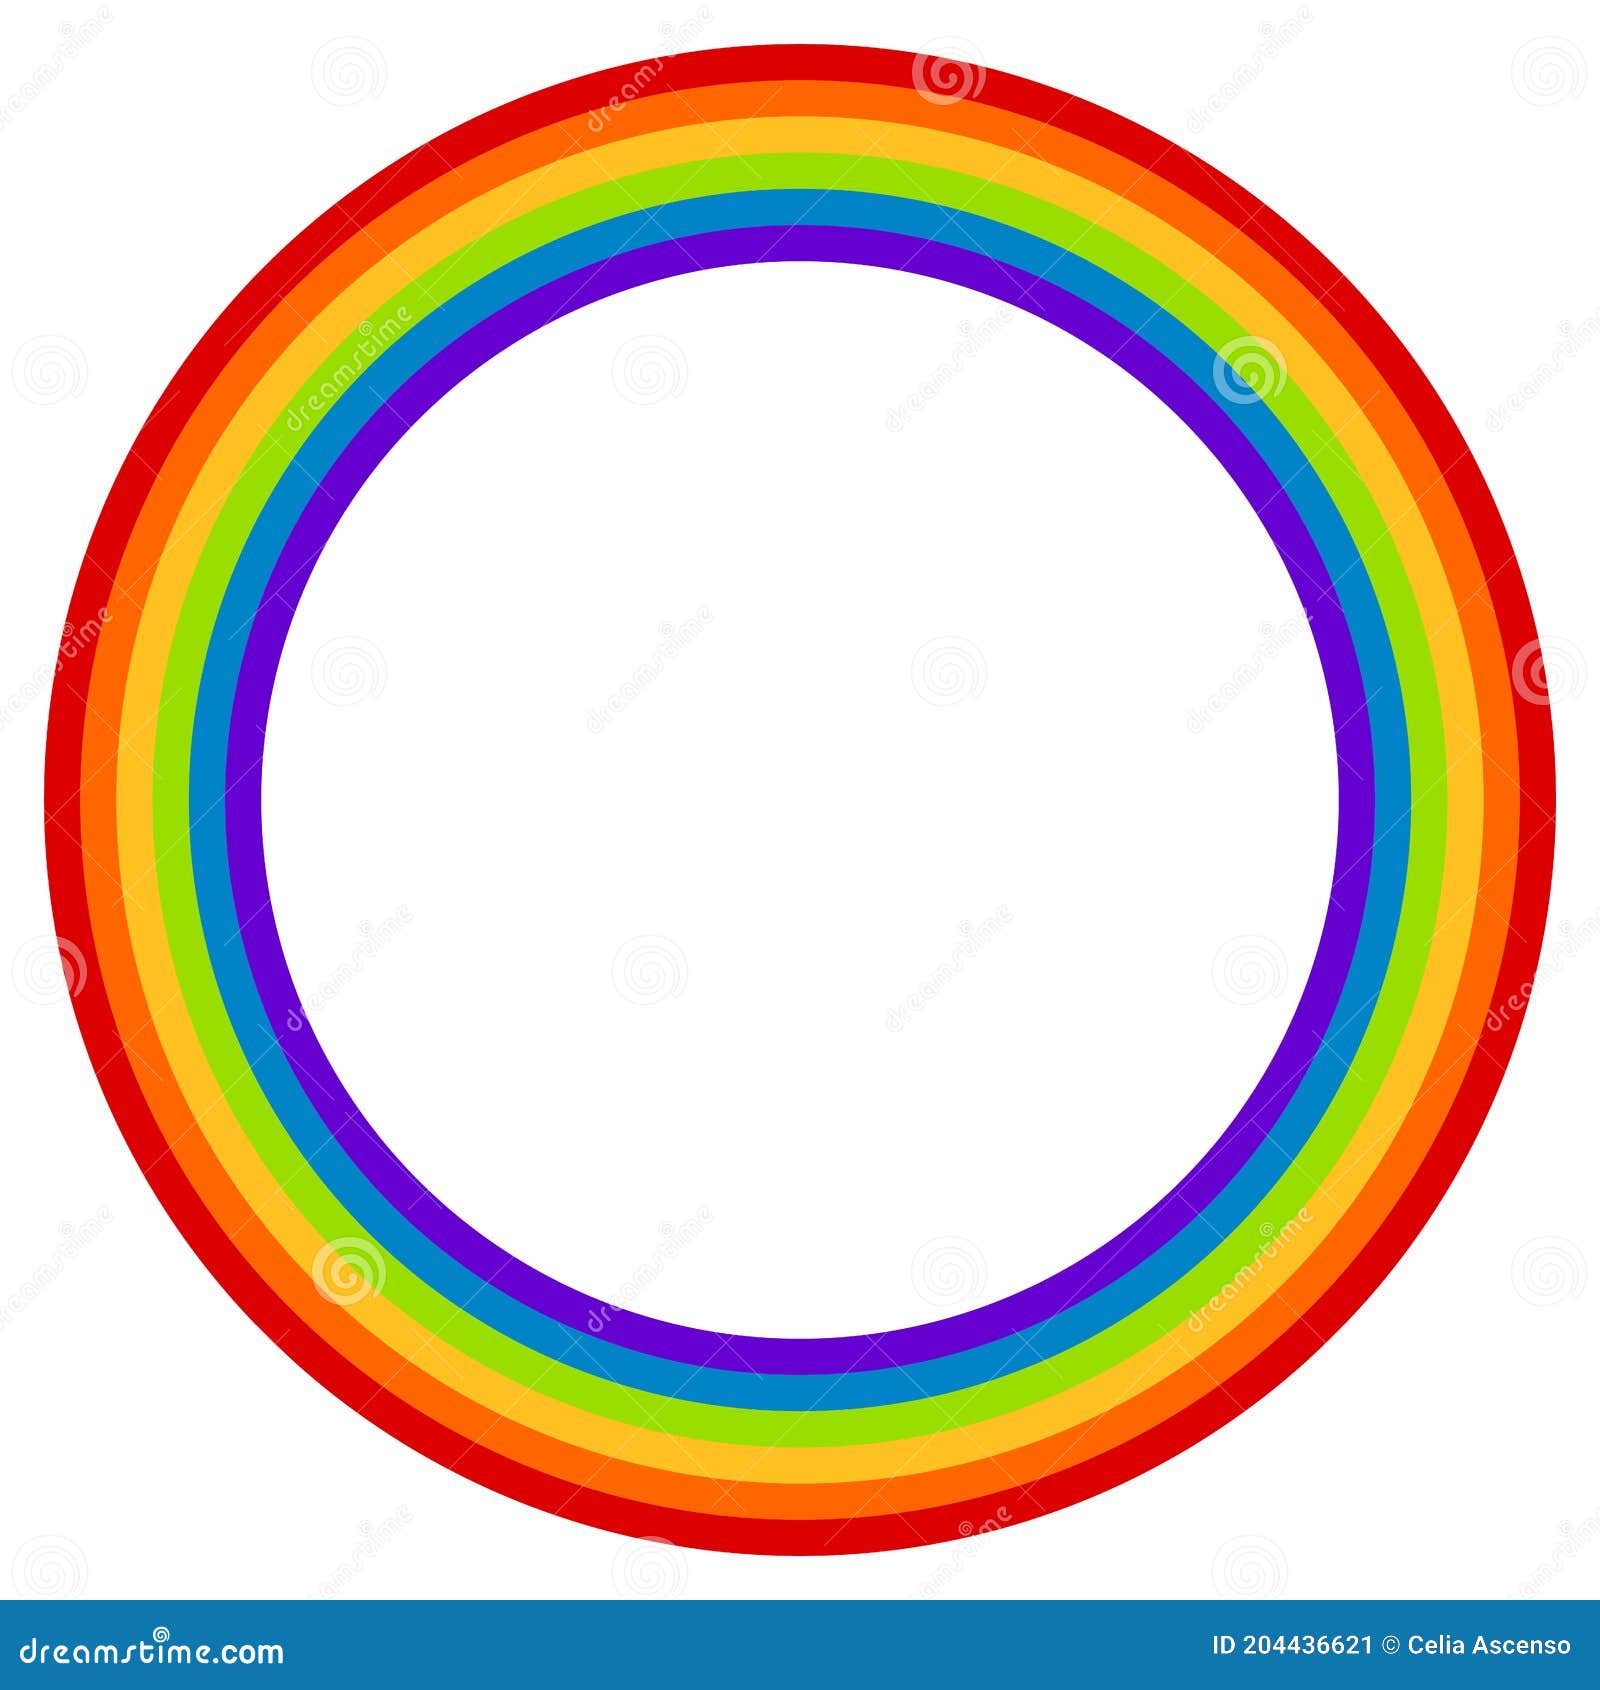 Transparent Circular Rainbow Round Frame Stock Image Illustration Of